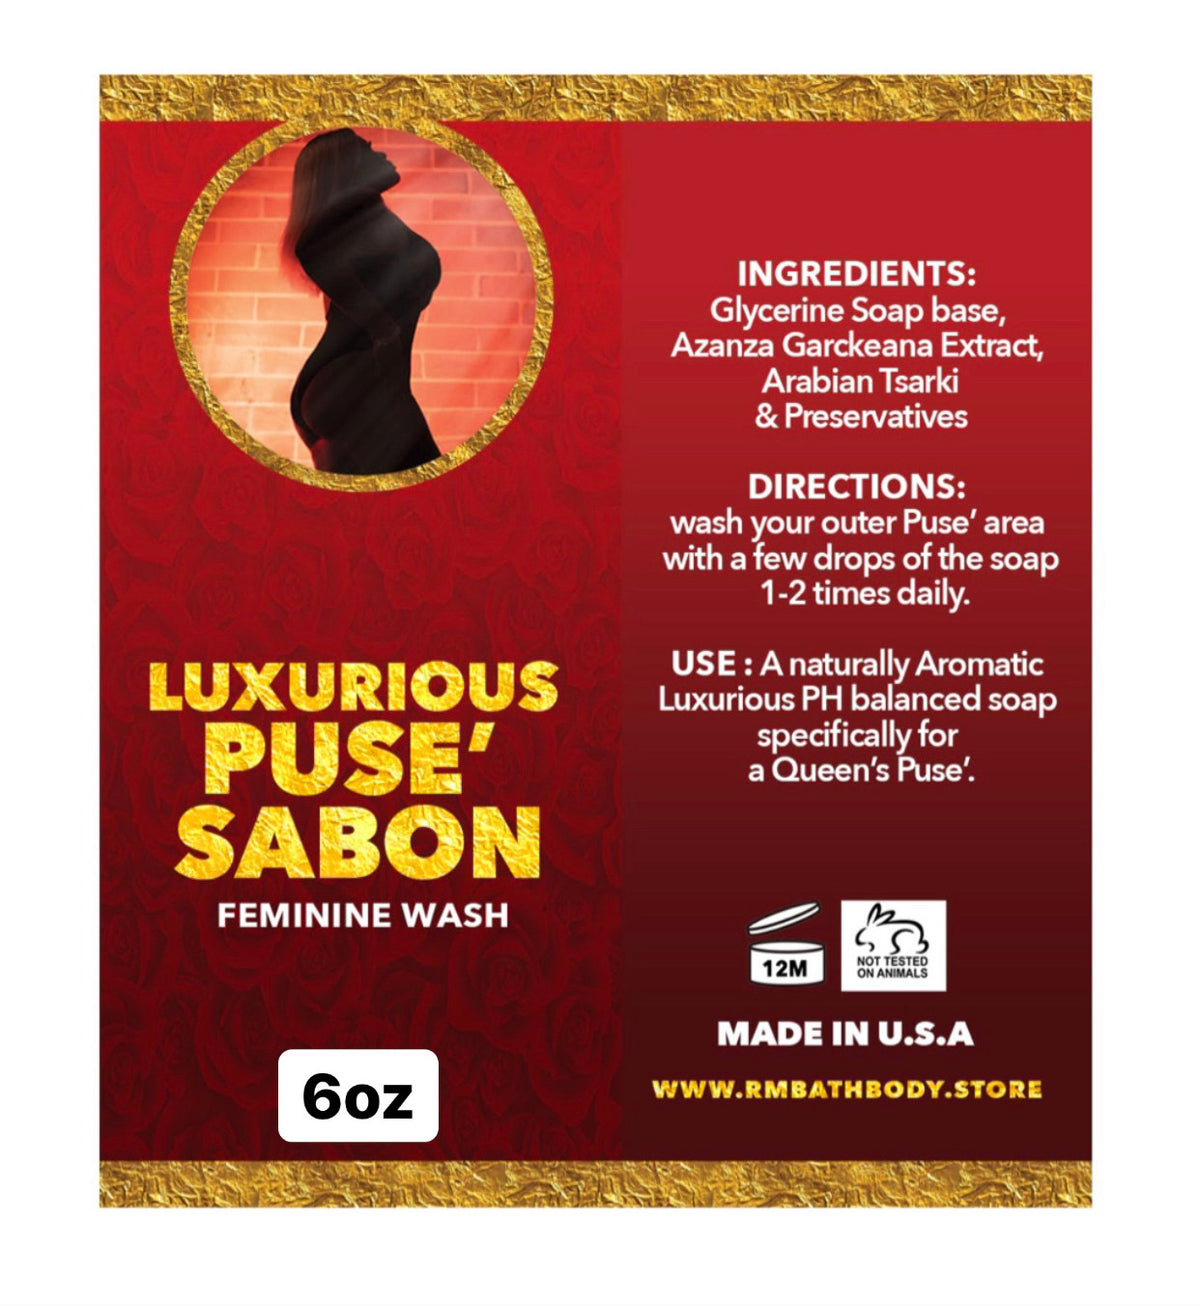 Luxurious Puse’ Sabon